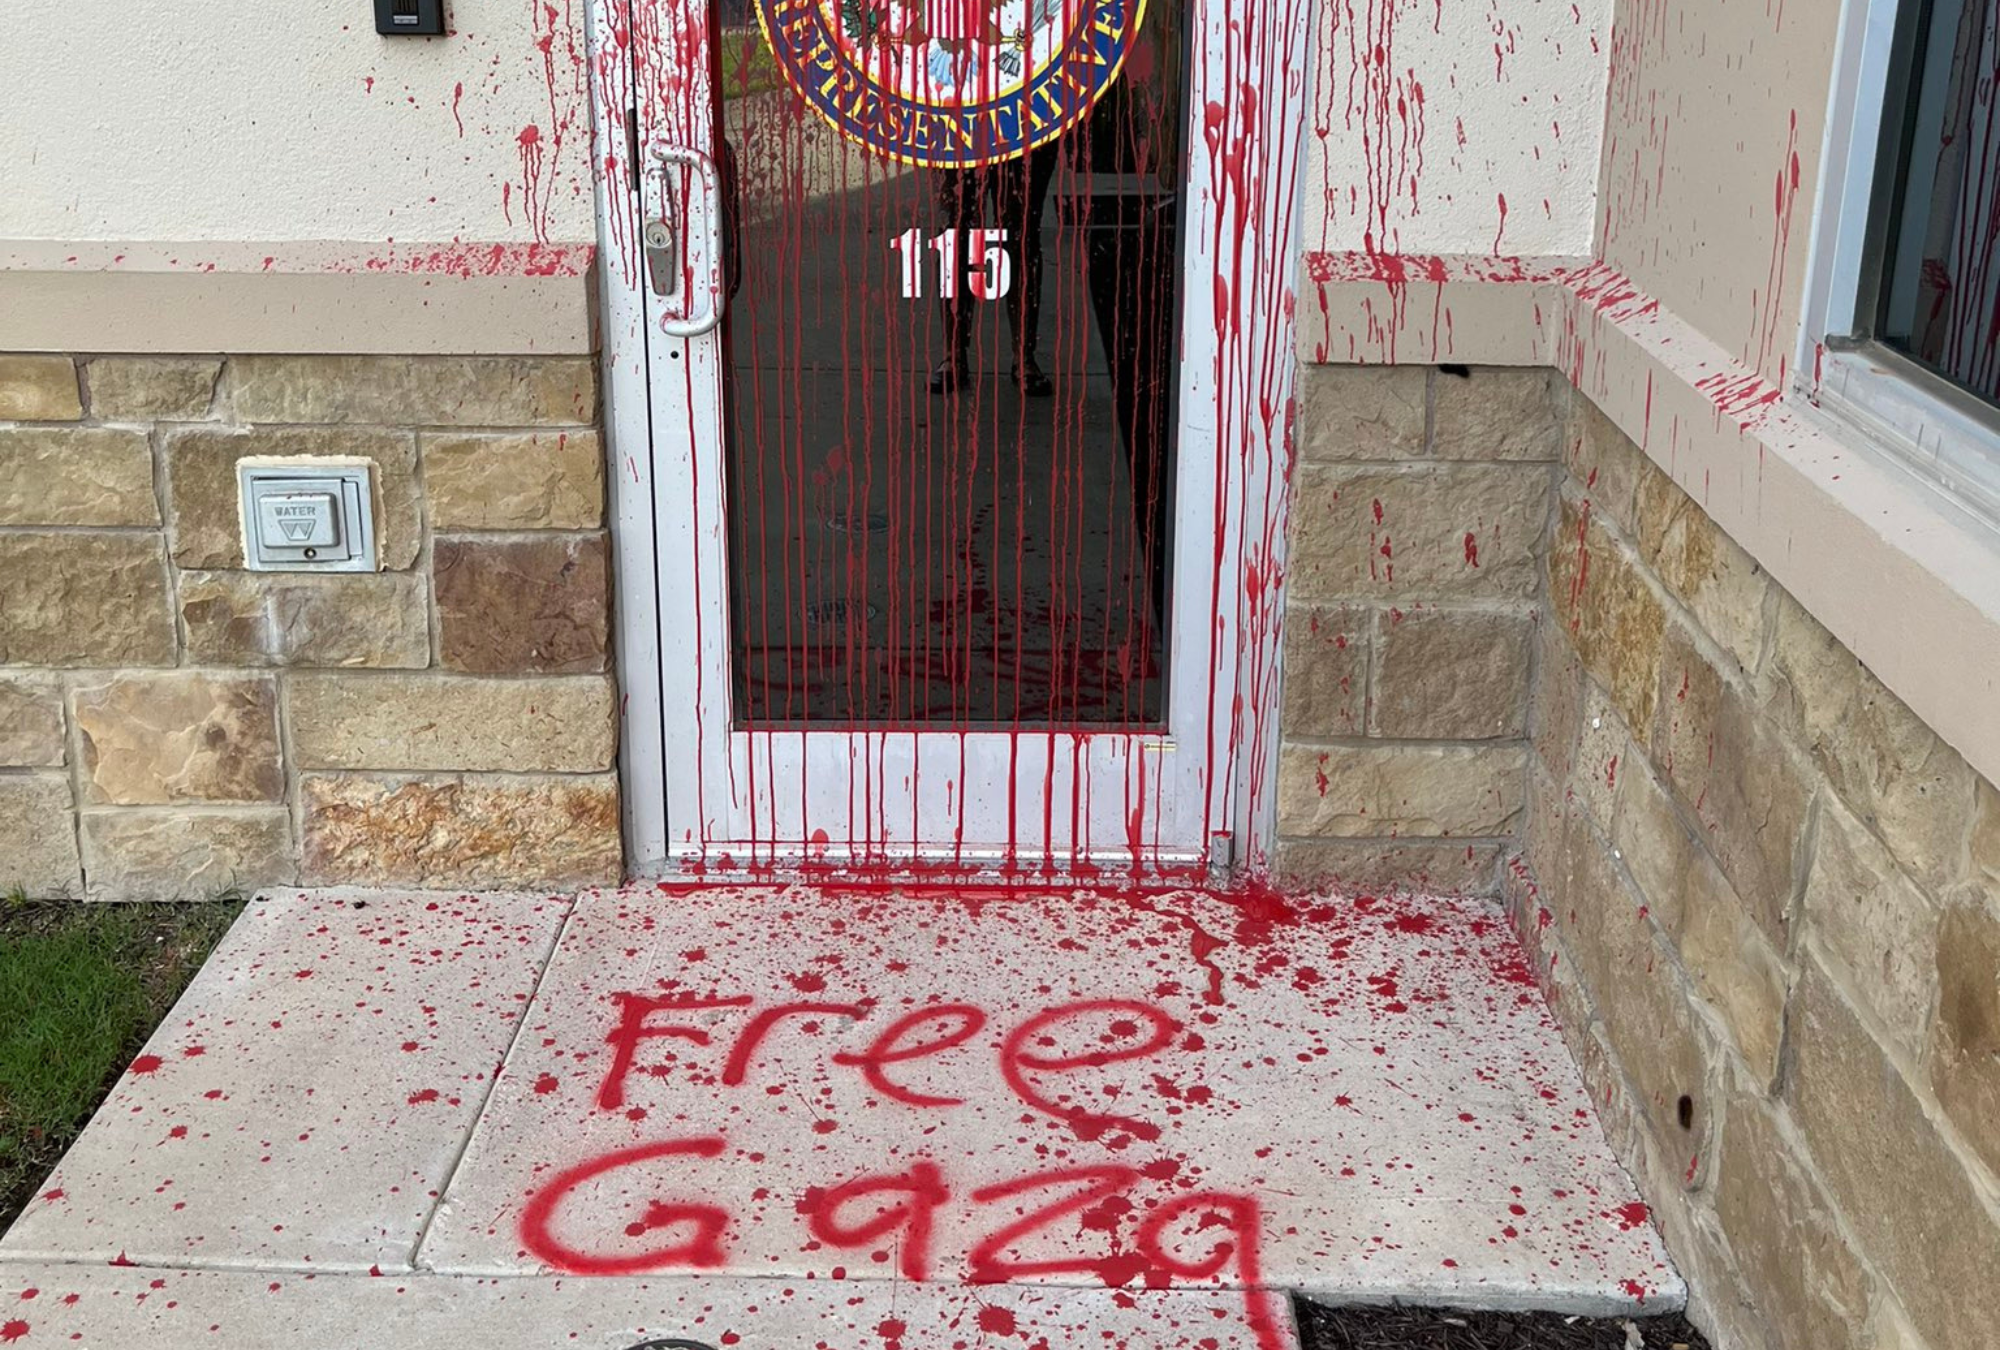 “Free Gaza” message, red liquid splattered at GOP congressman’s office